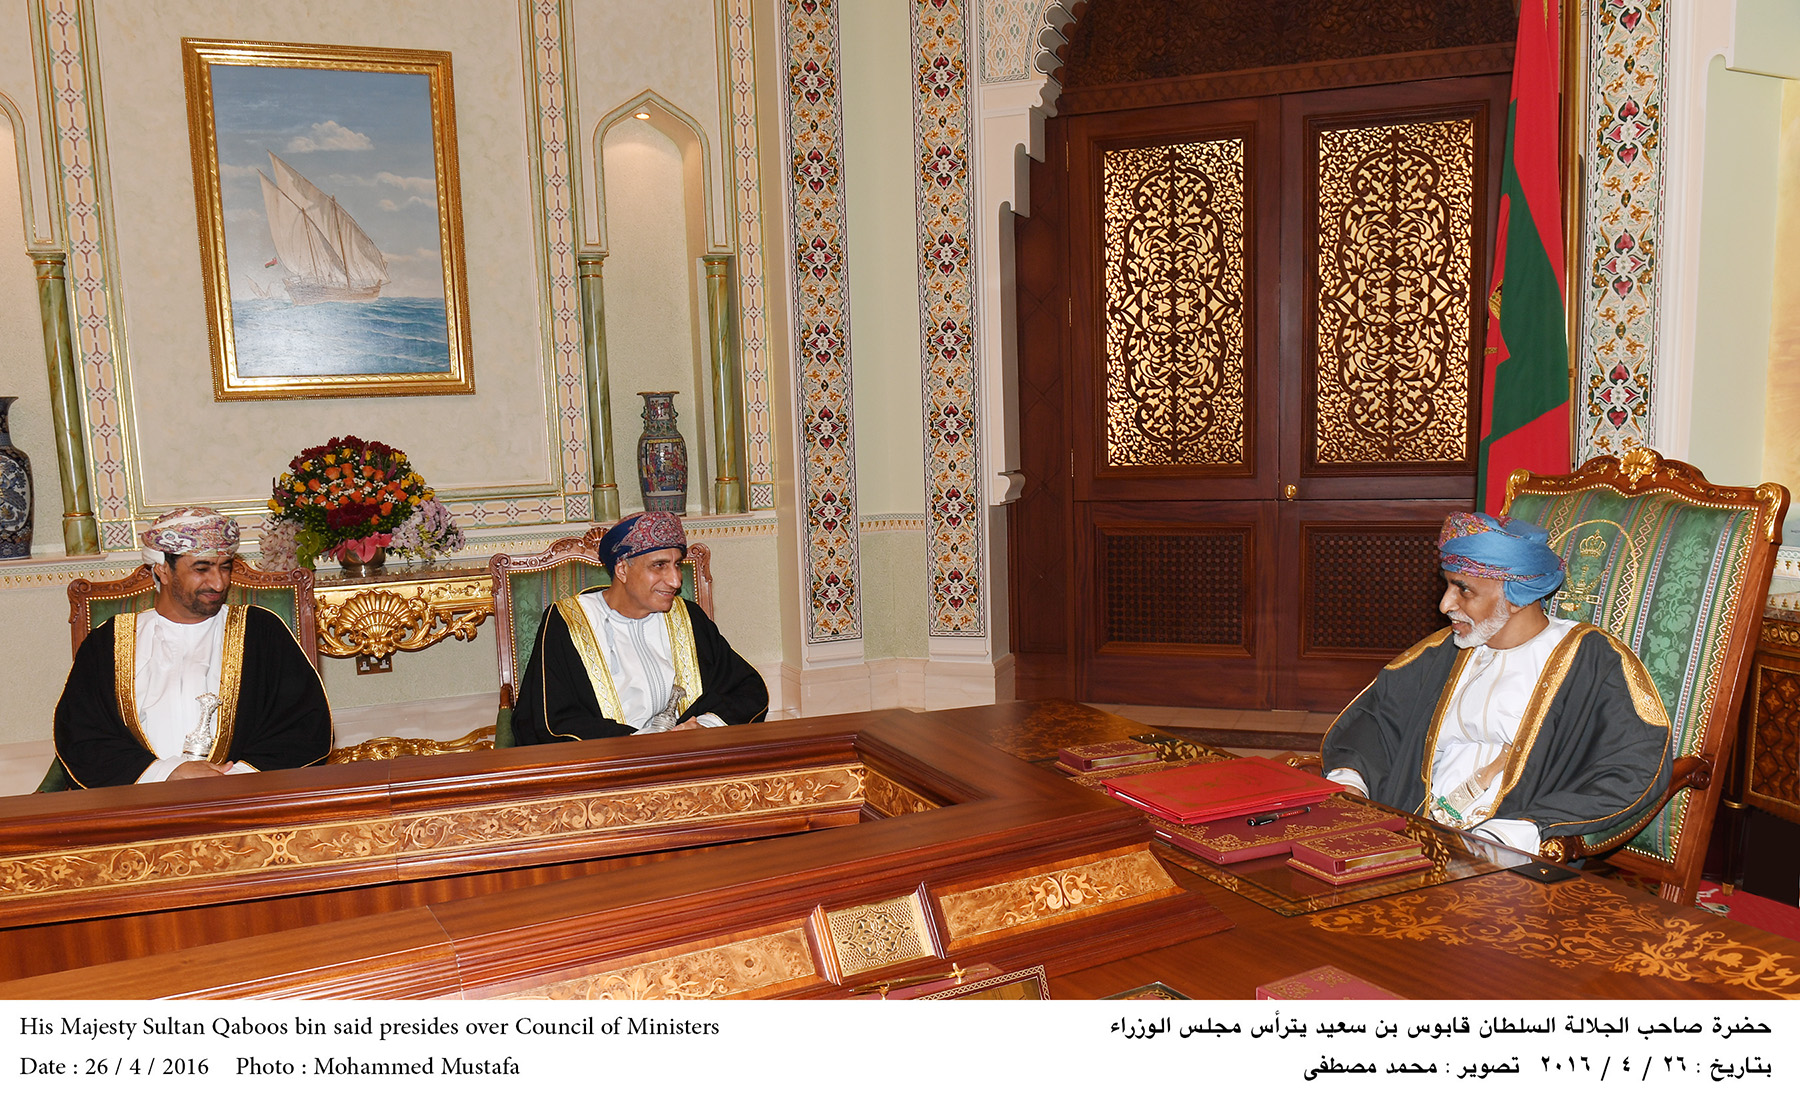 His Majesty Sultan Qaboos stresses on economic diversification